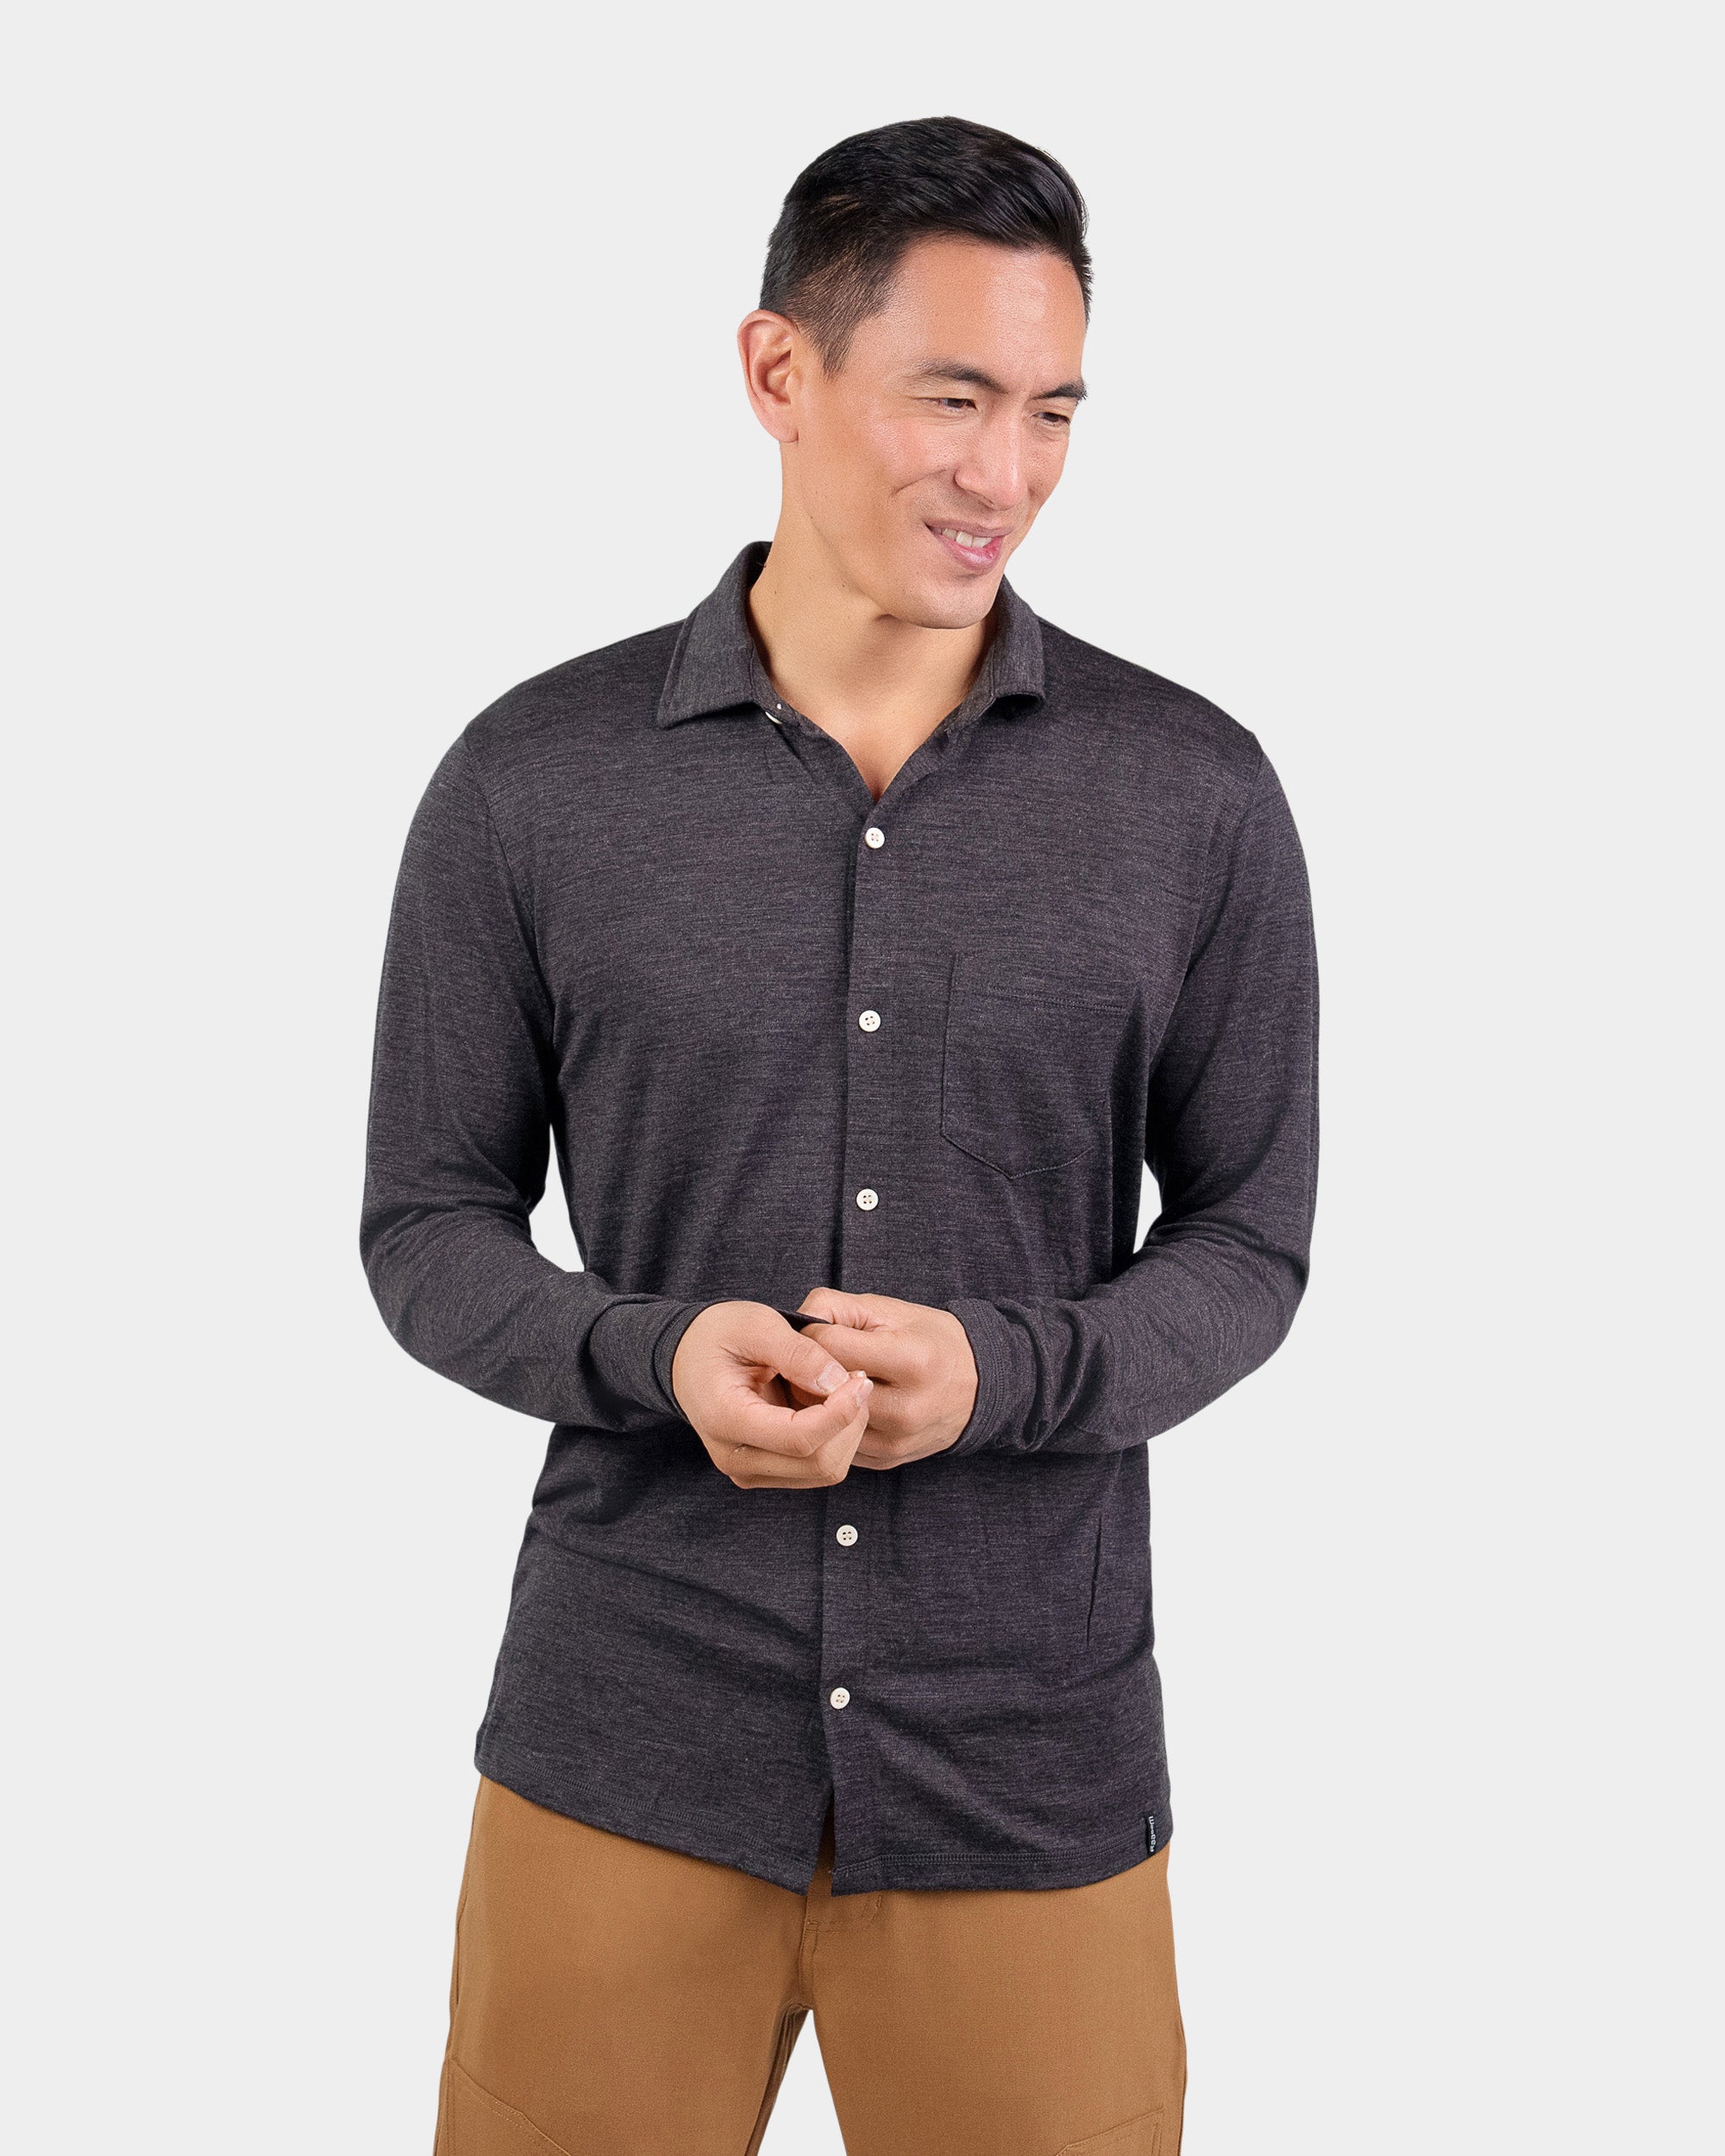  Fashion Clothes Men's Long Sleeve Button Down Shirt